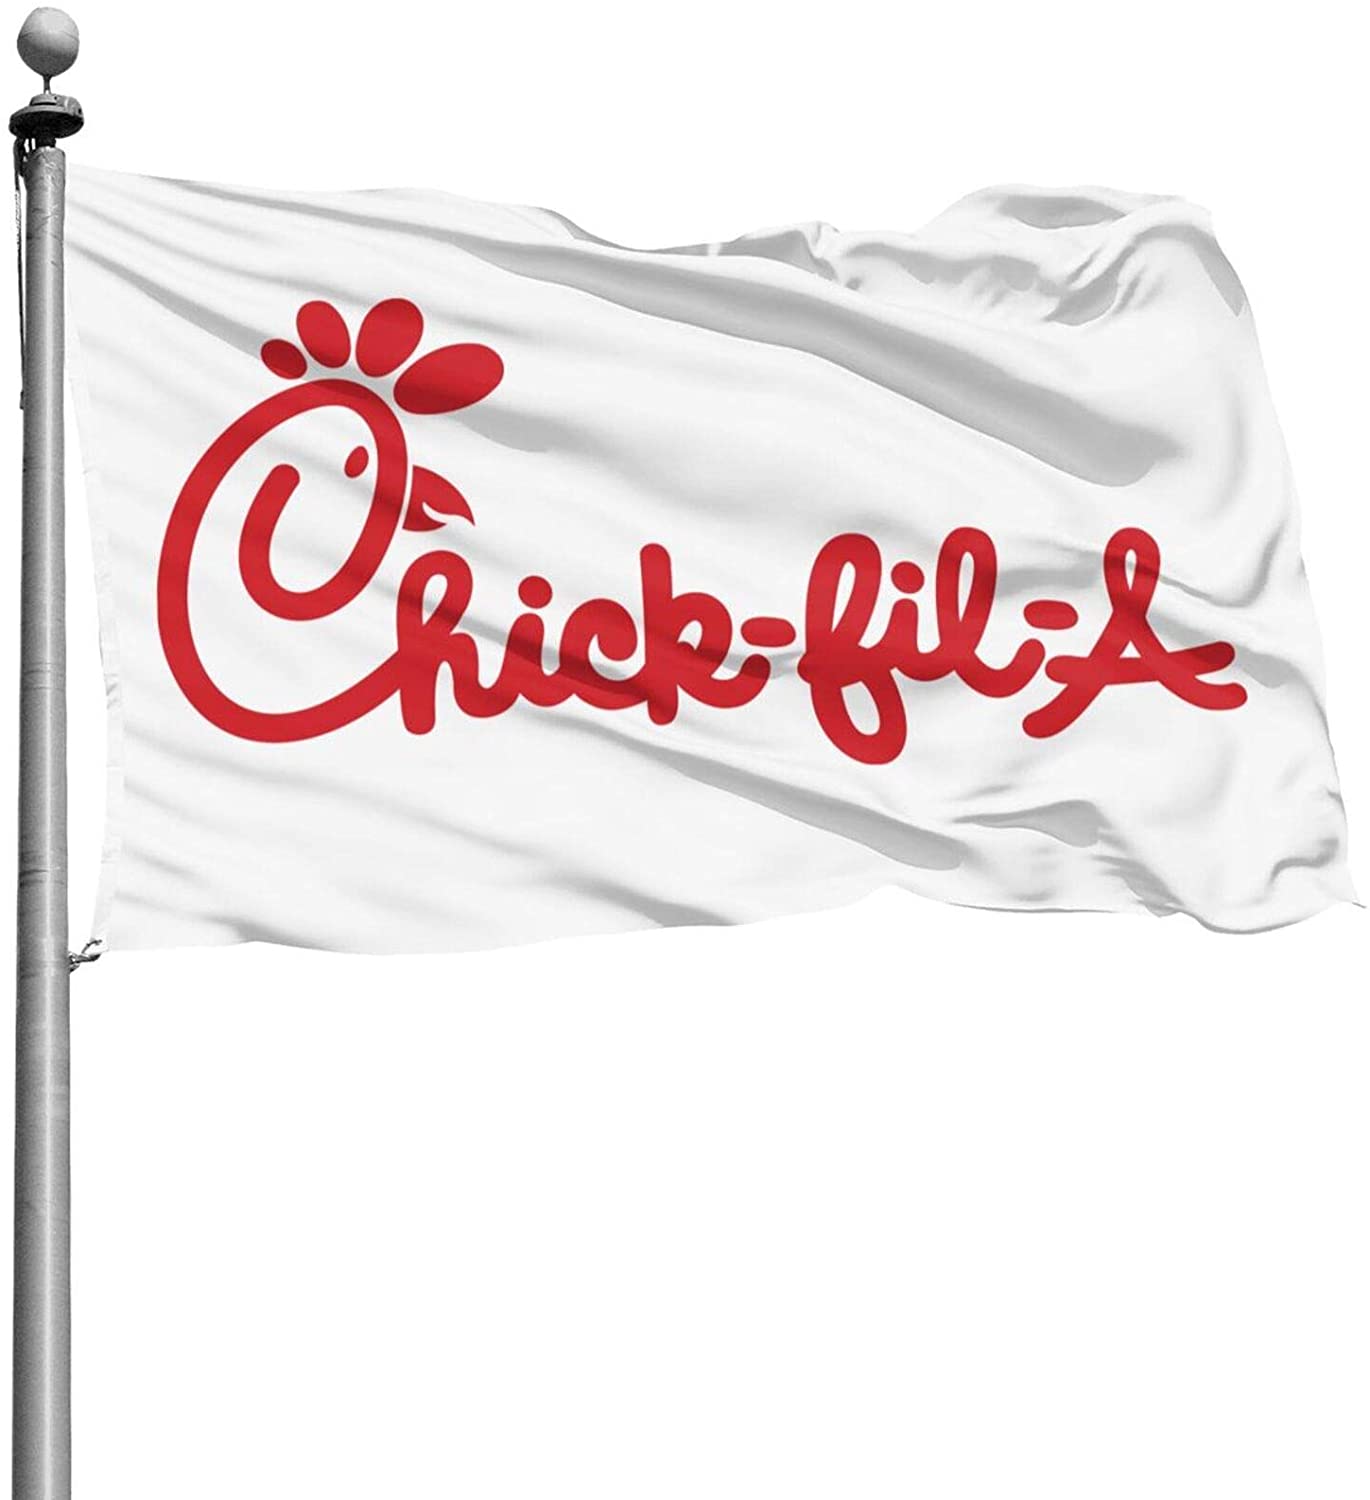 chick-fil-a-flag